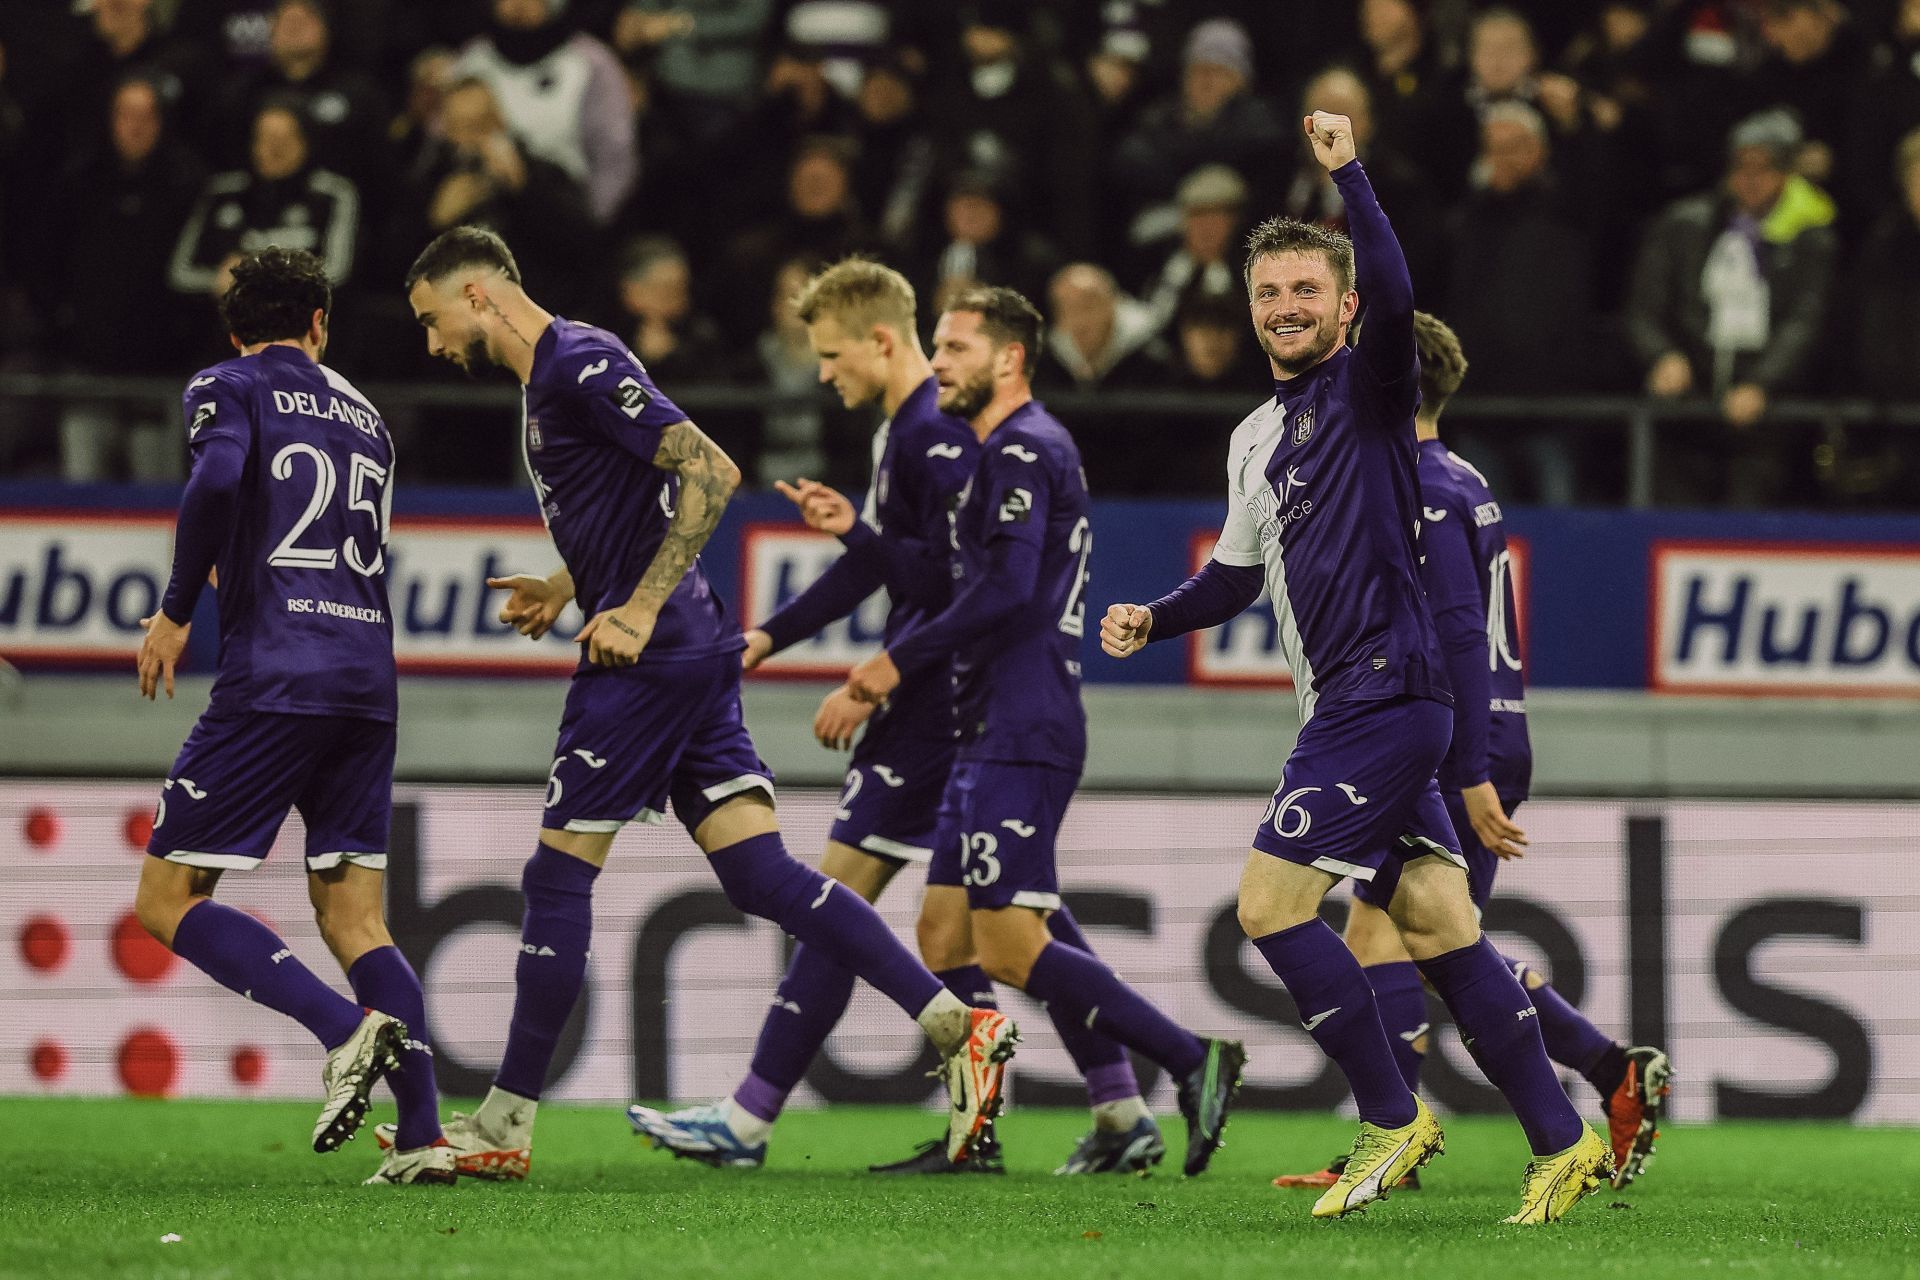 Anderlecht face Leuven on Sunday 